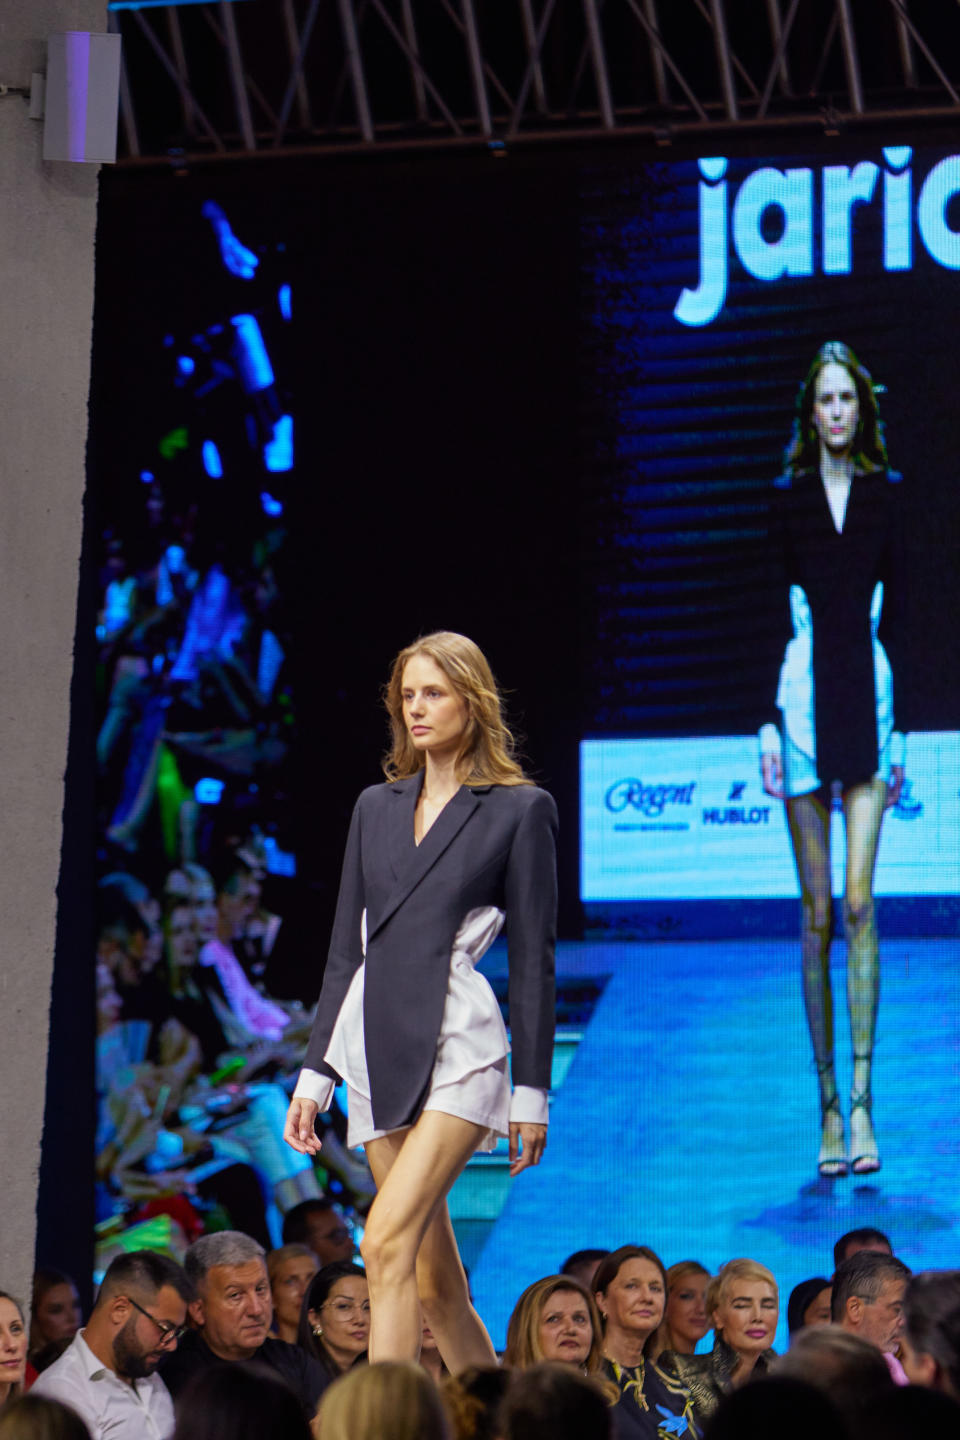 A look from Jaric at the International Fashion Festival. - Credit: Zoran Radonjic